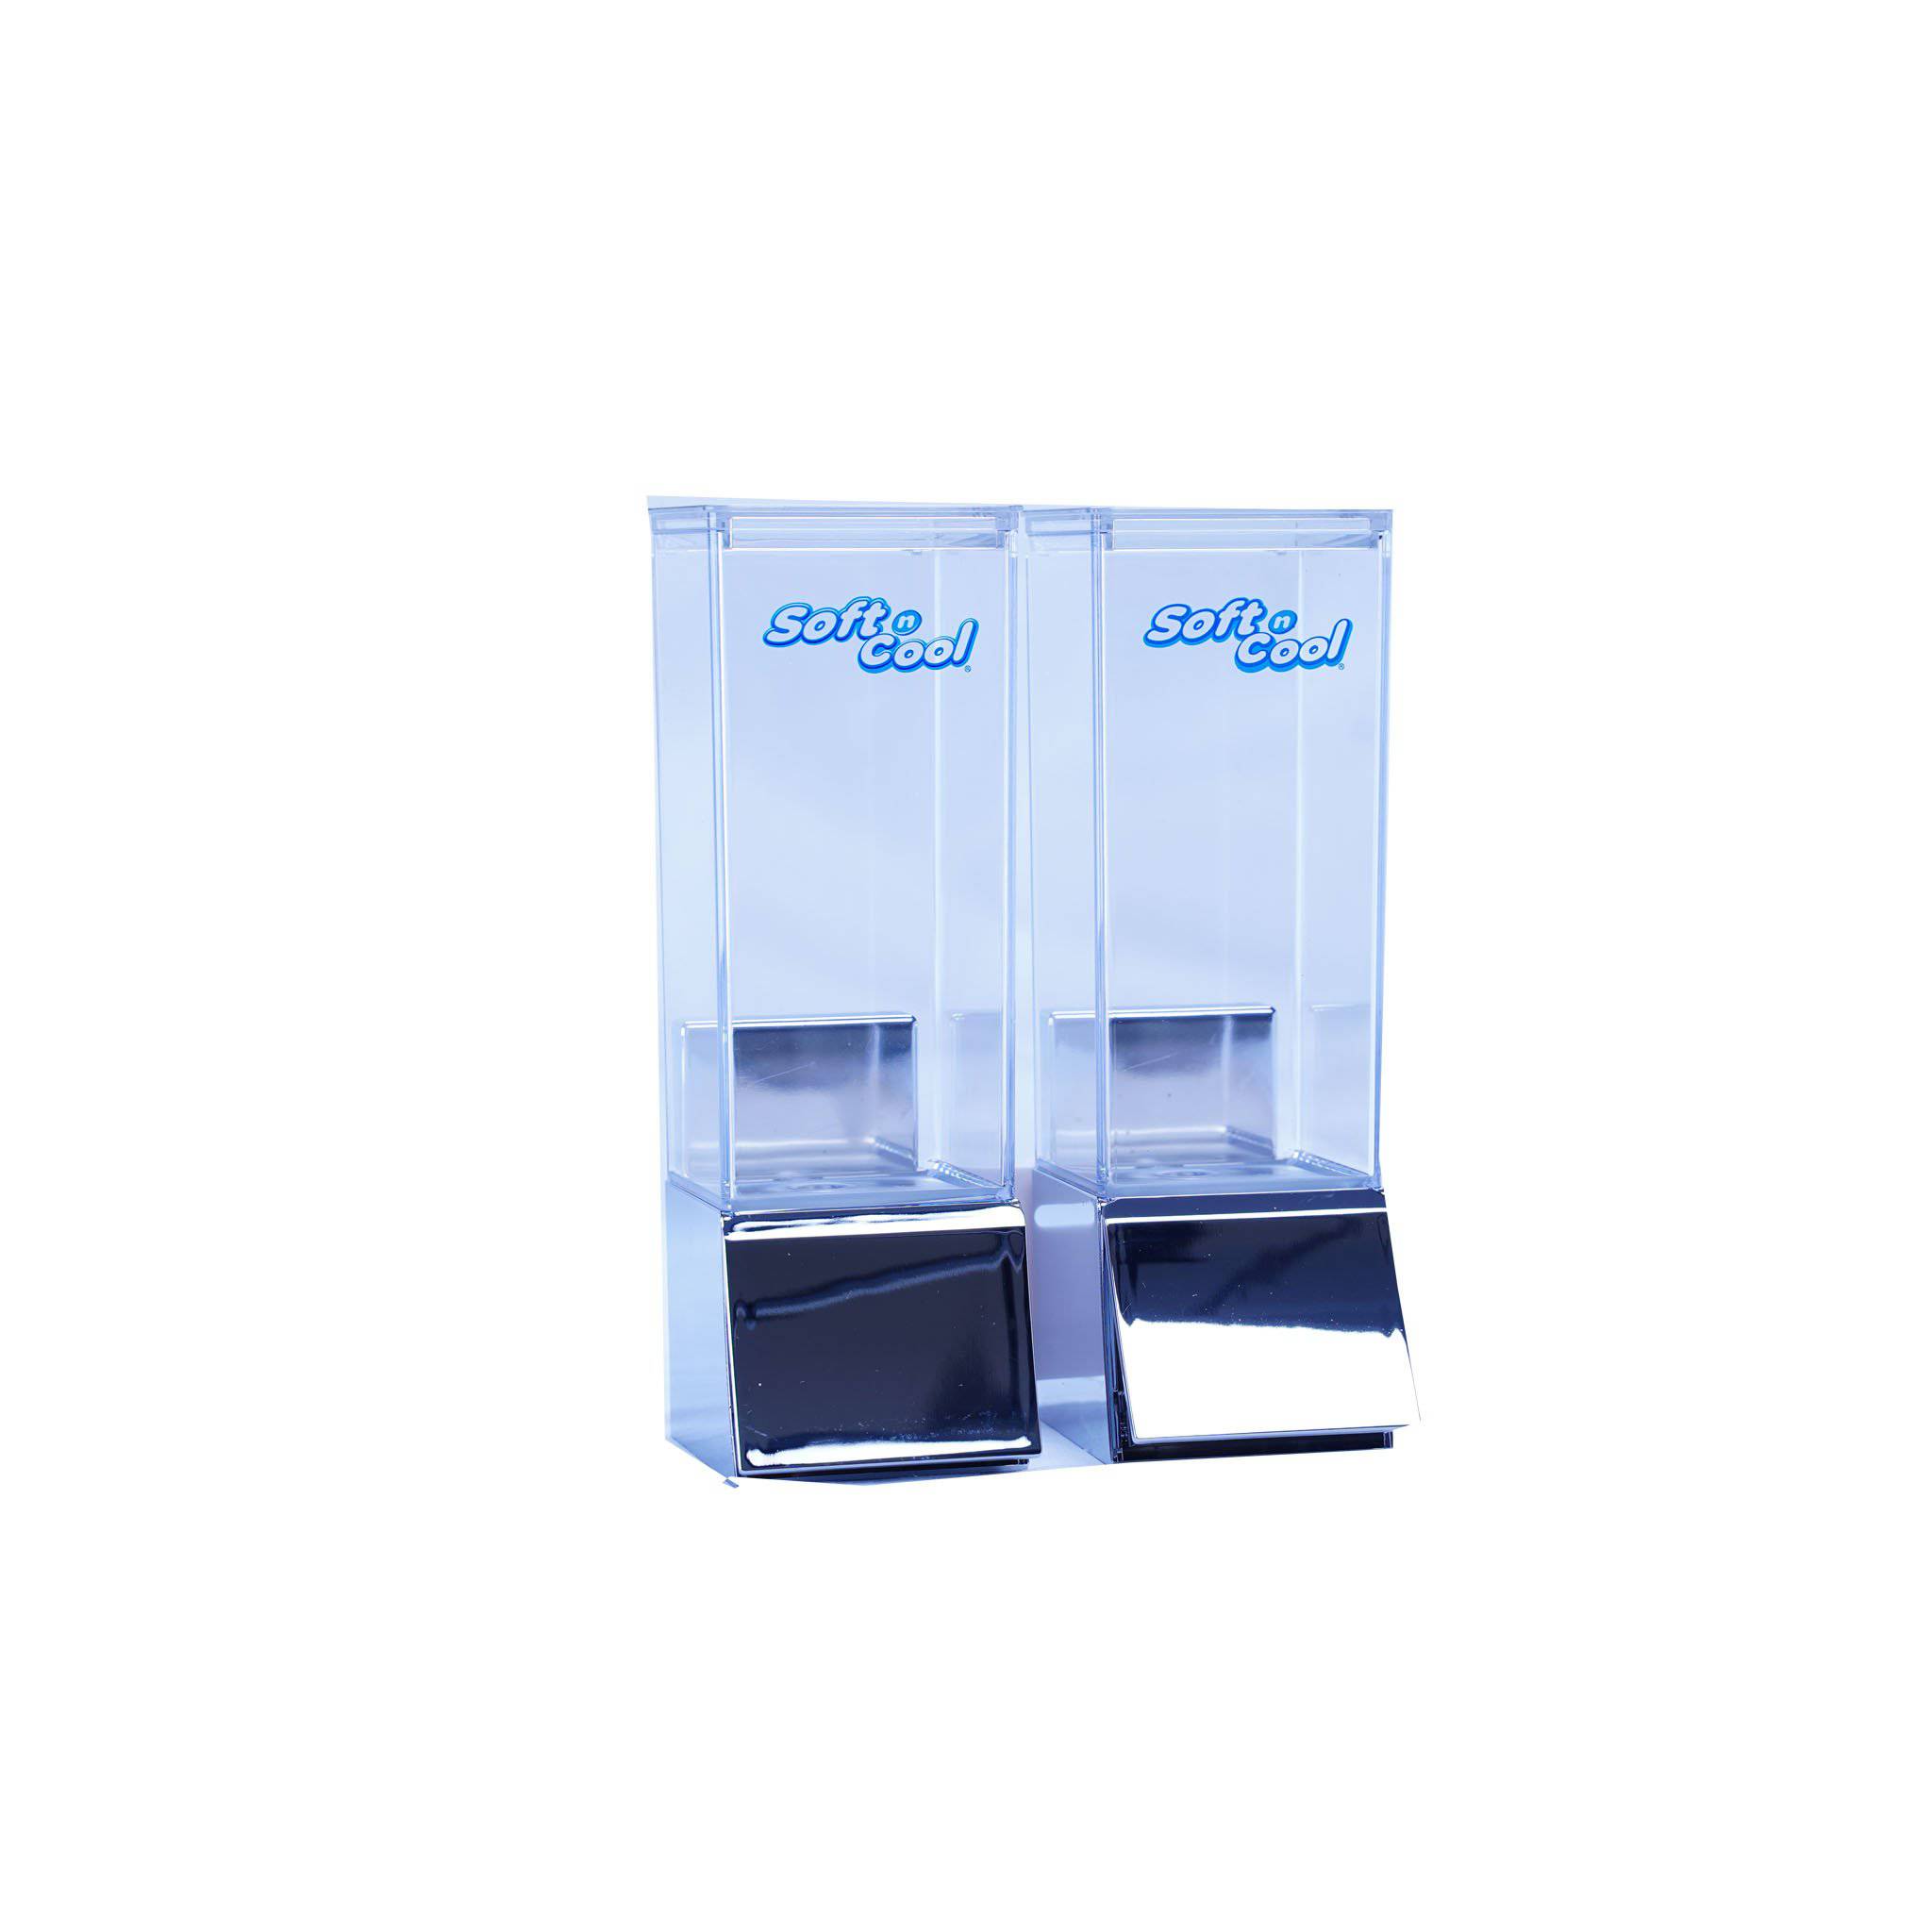 Hotpack |  Stainless Steel Liquid/Foam Soap Dispenser 400 ML Capacity  | 1 Piece - Hotpack Global